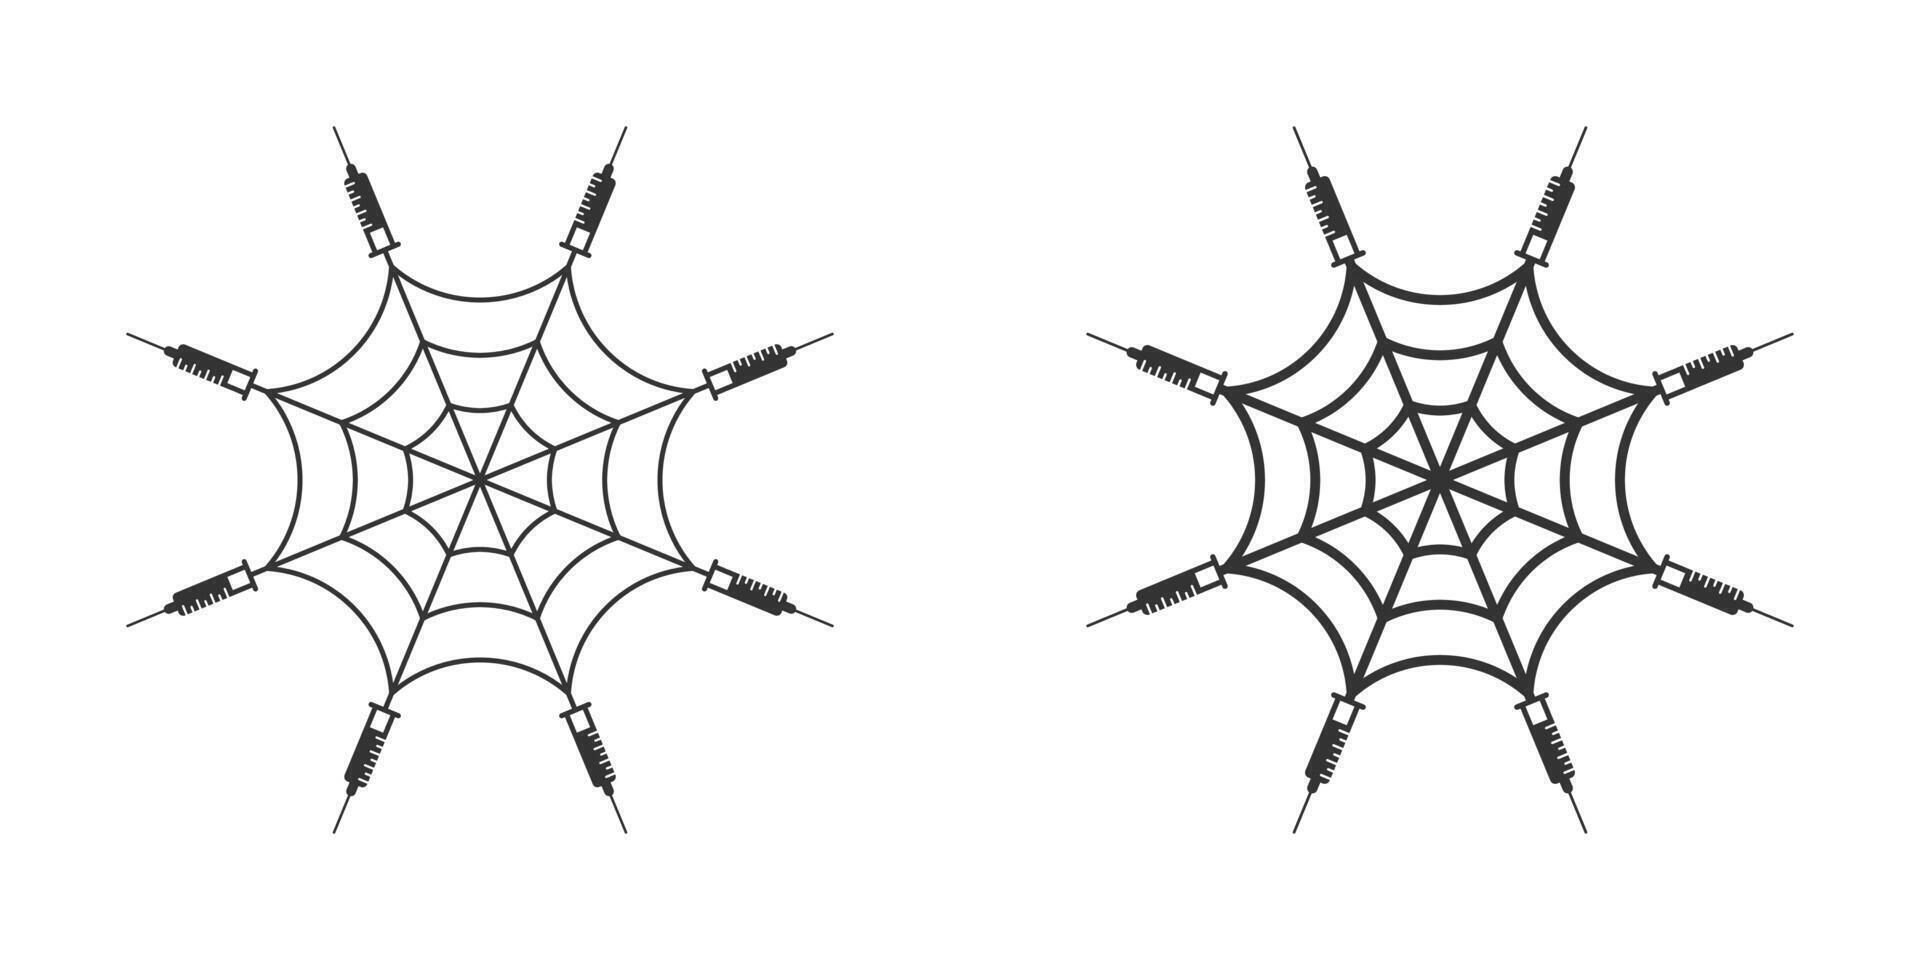 Spider web with syringes. Drug addiction concept. Vector illustration.